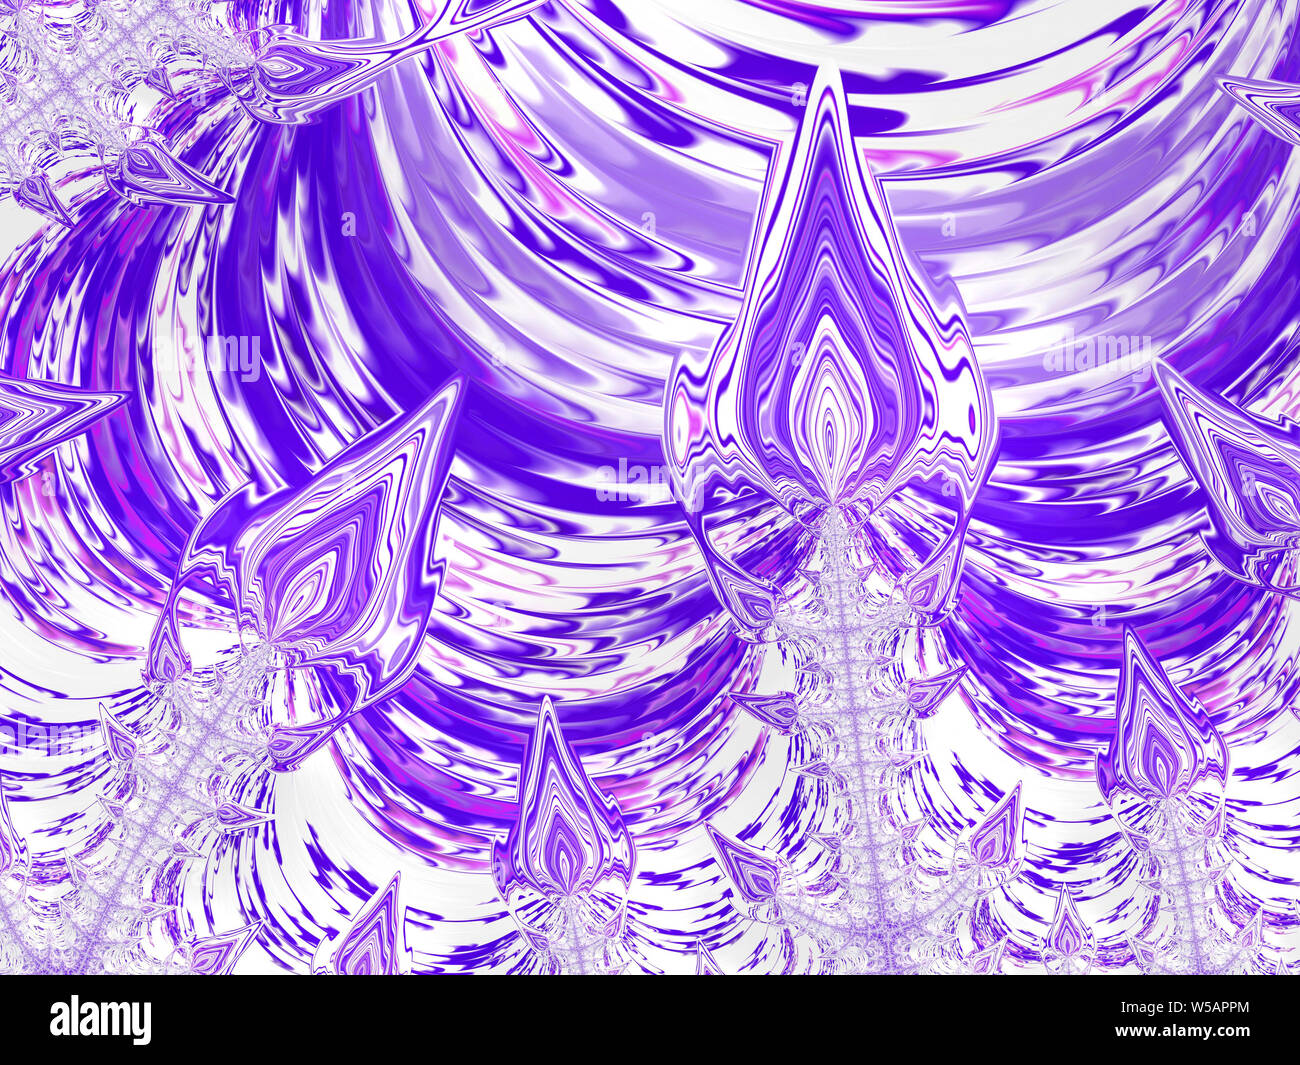 Purple fractal image Stock Photo